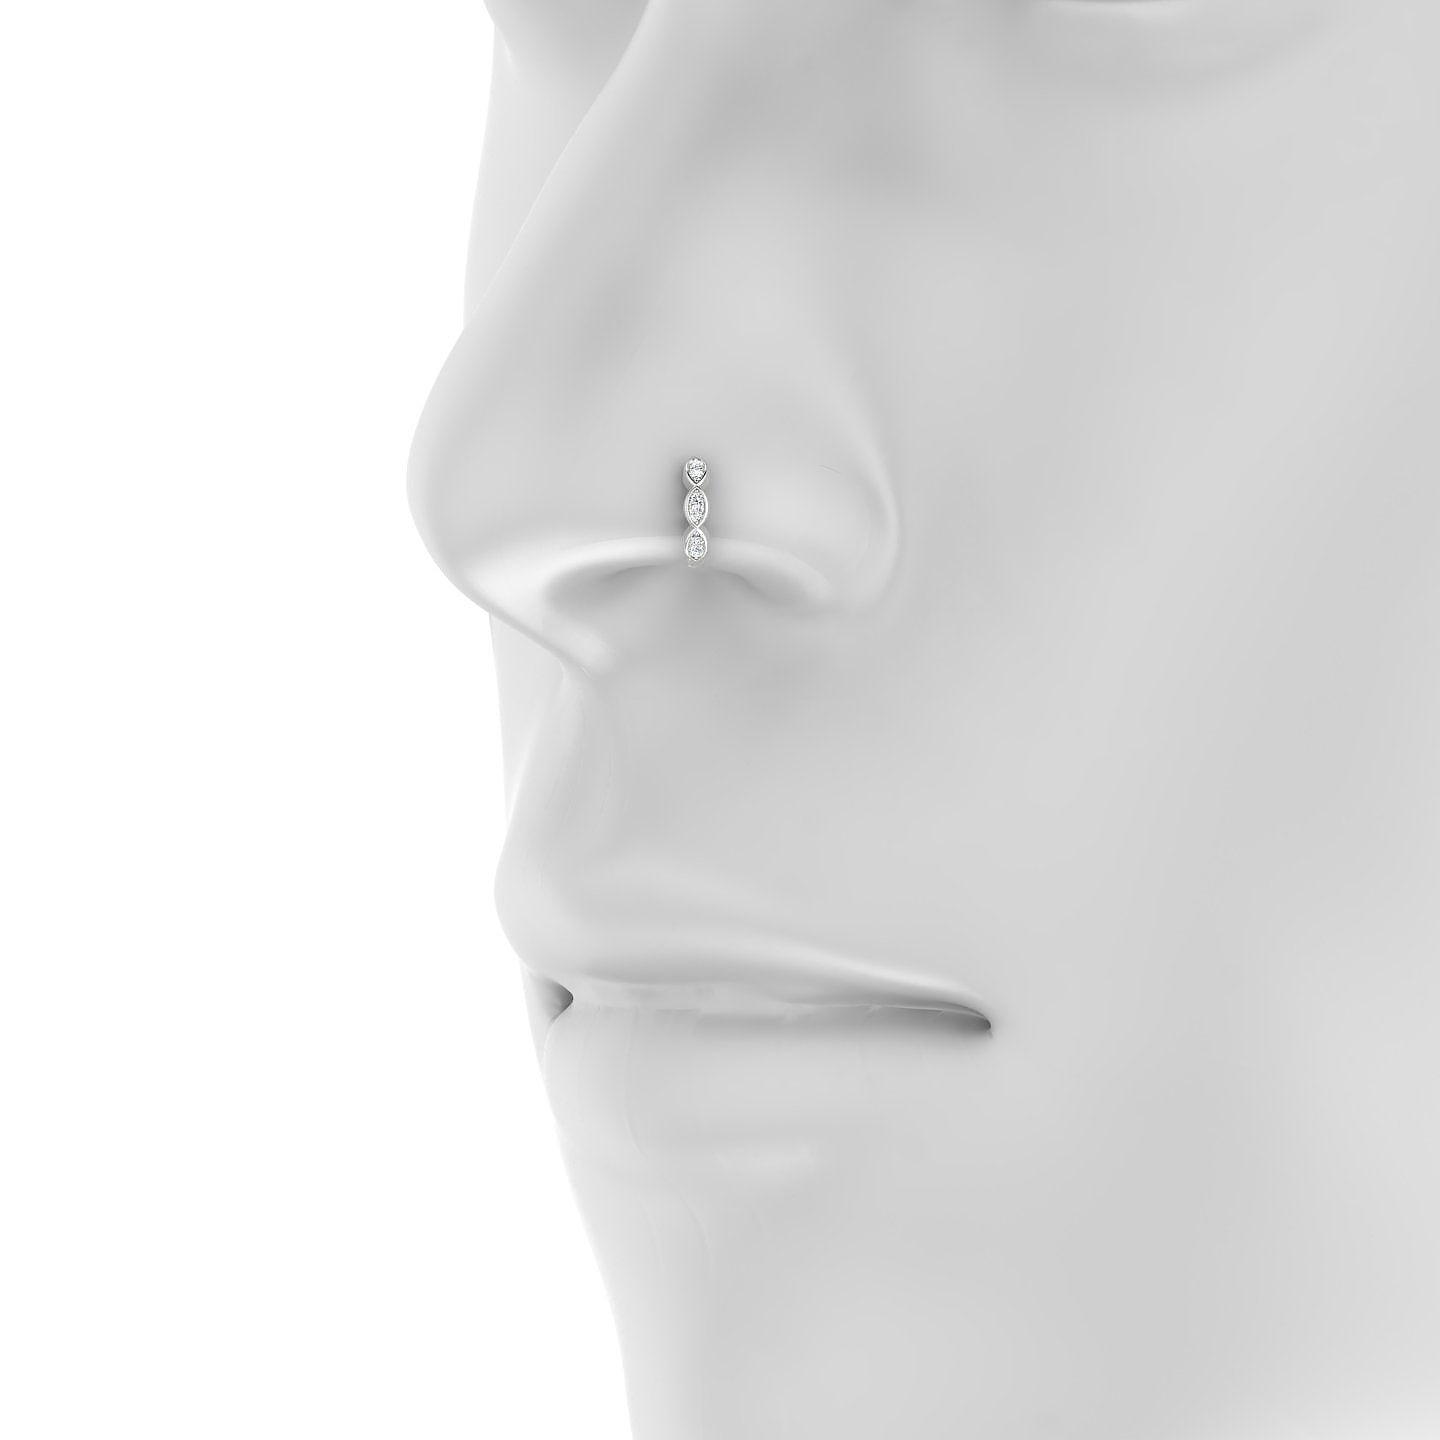 Hathor | 18k White Gold 6.5 mm Diamond Nose Ring Piercing